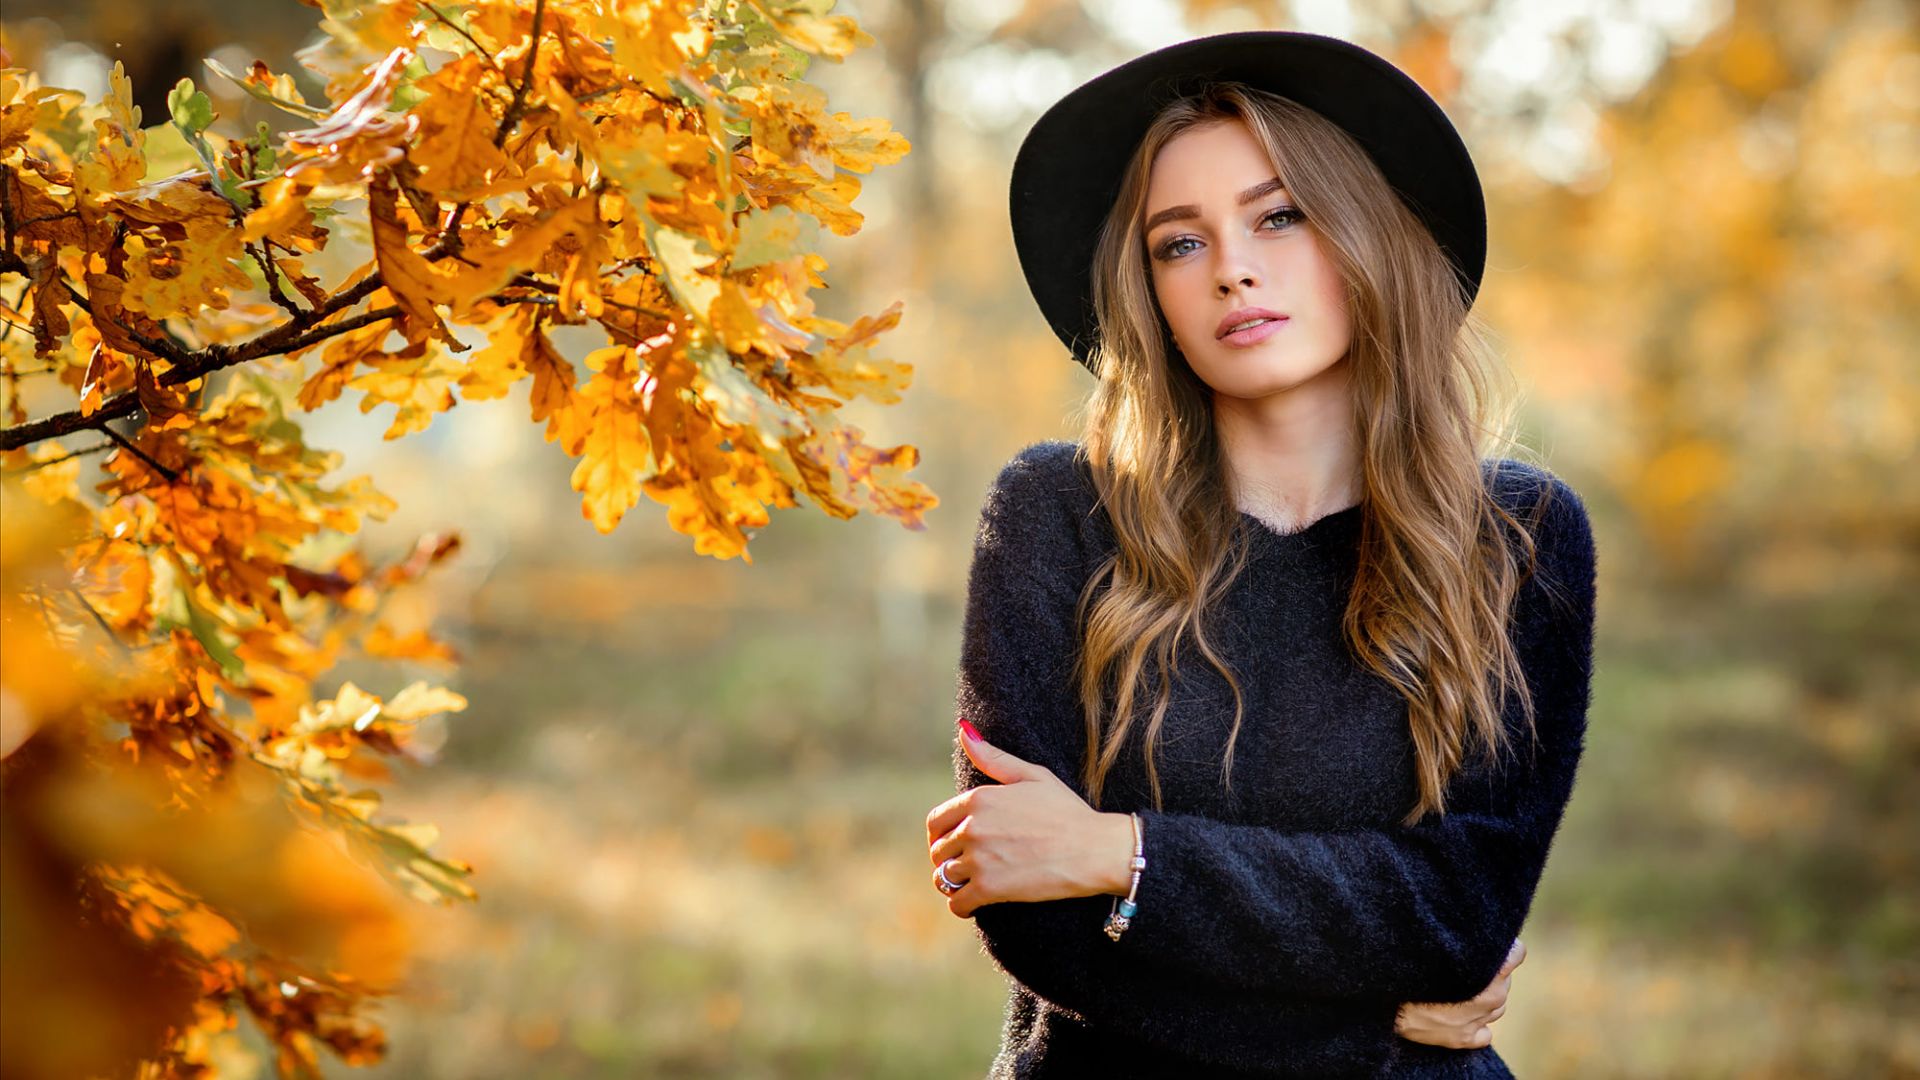 Wallpaper Crossed arms, girl model, outdoor, autumn